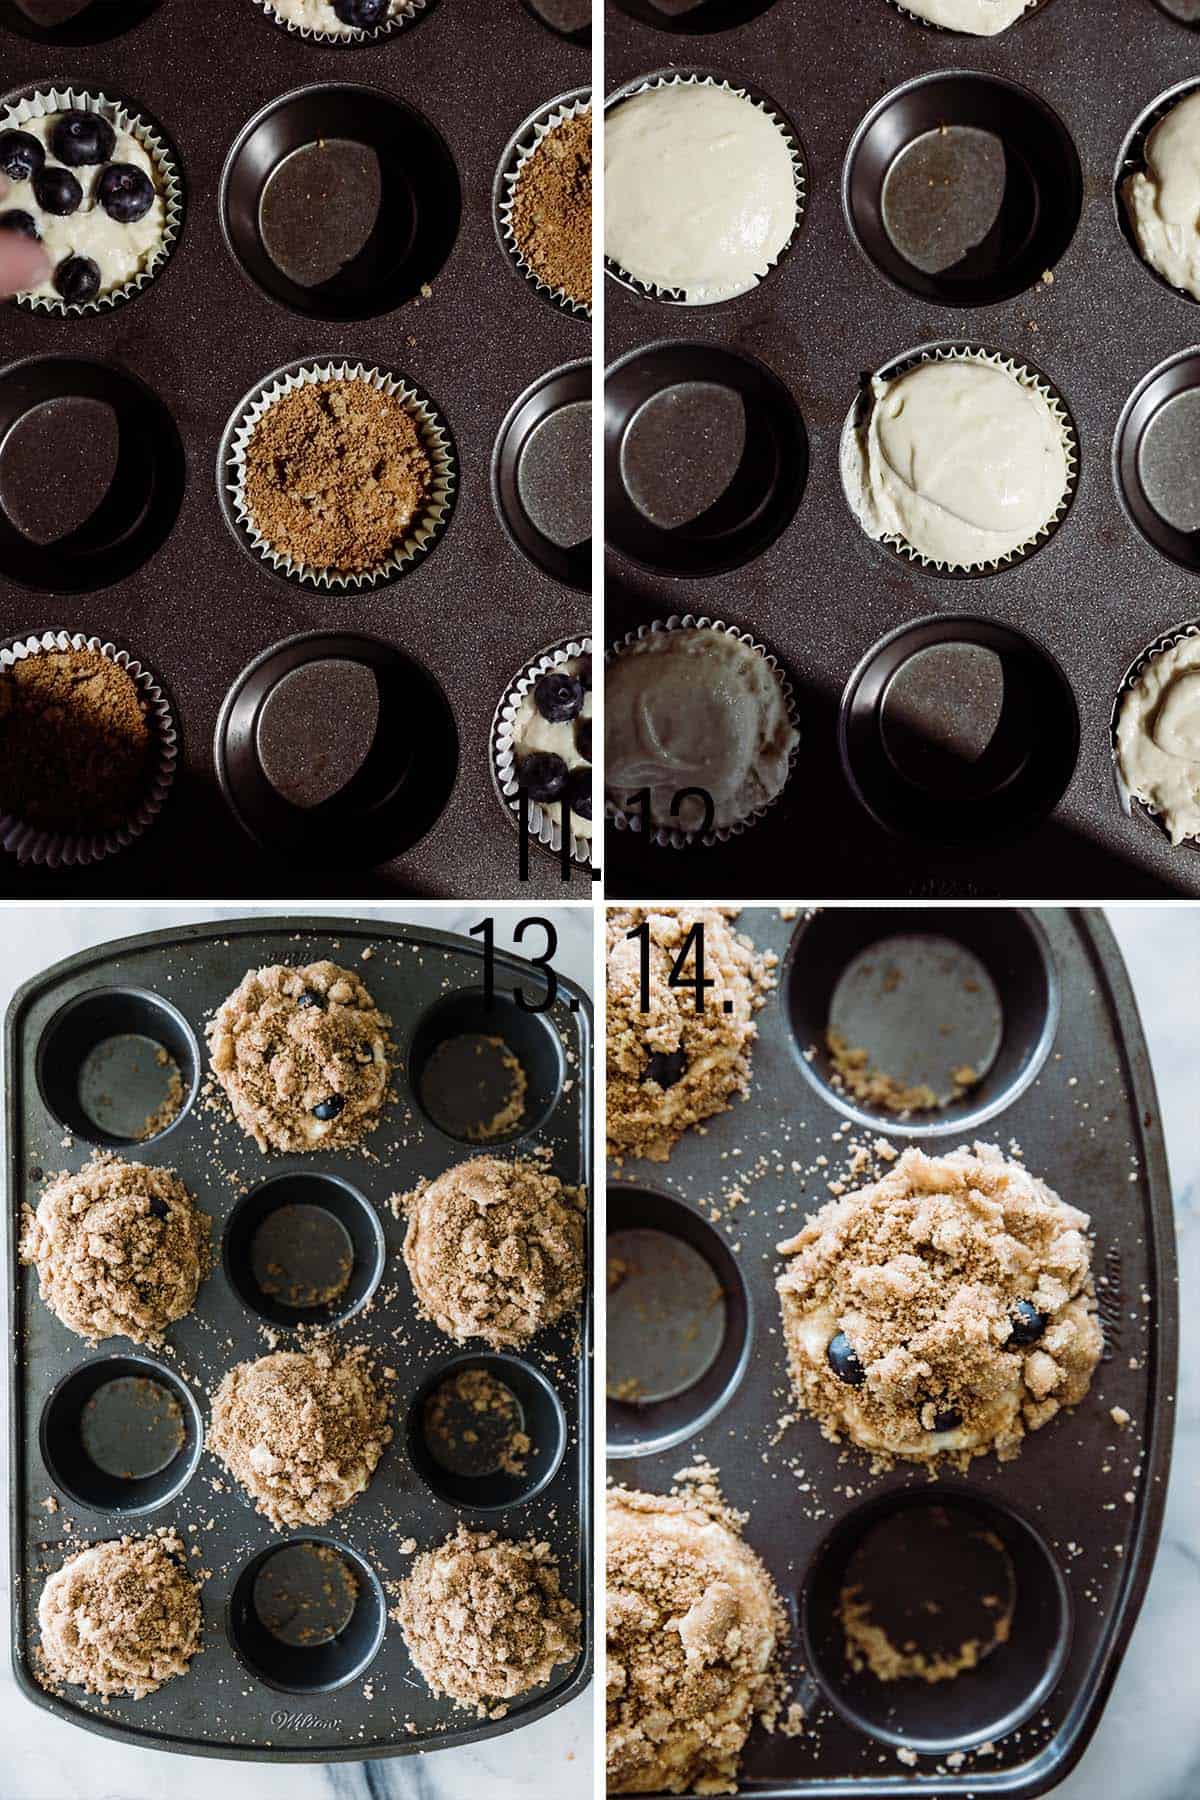 How to make coffee cake muffins.